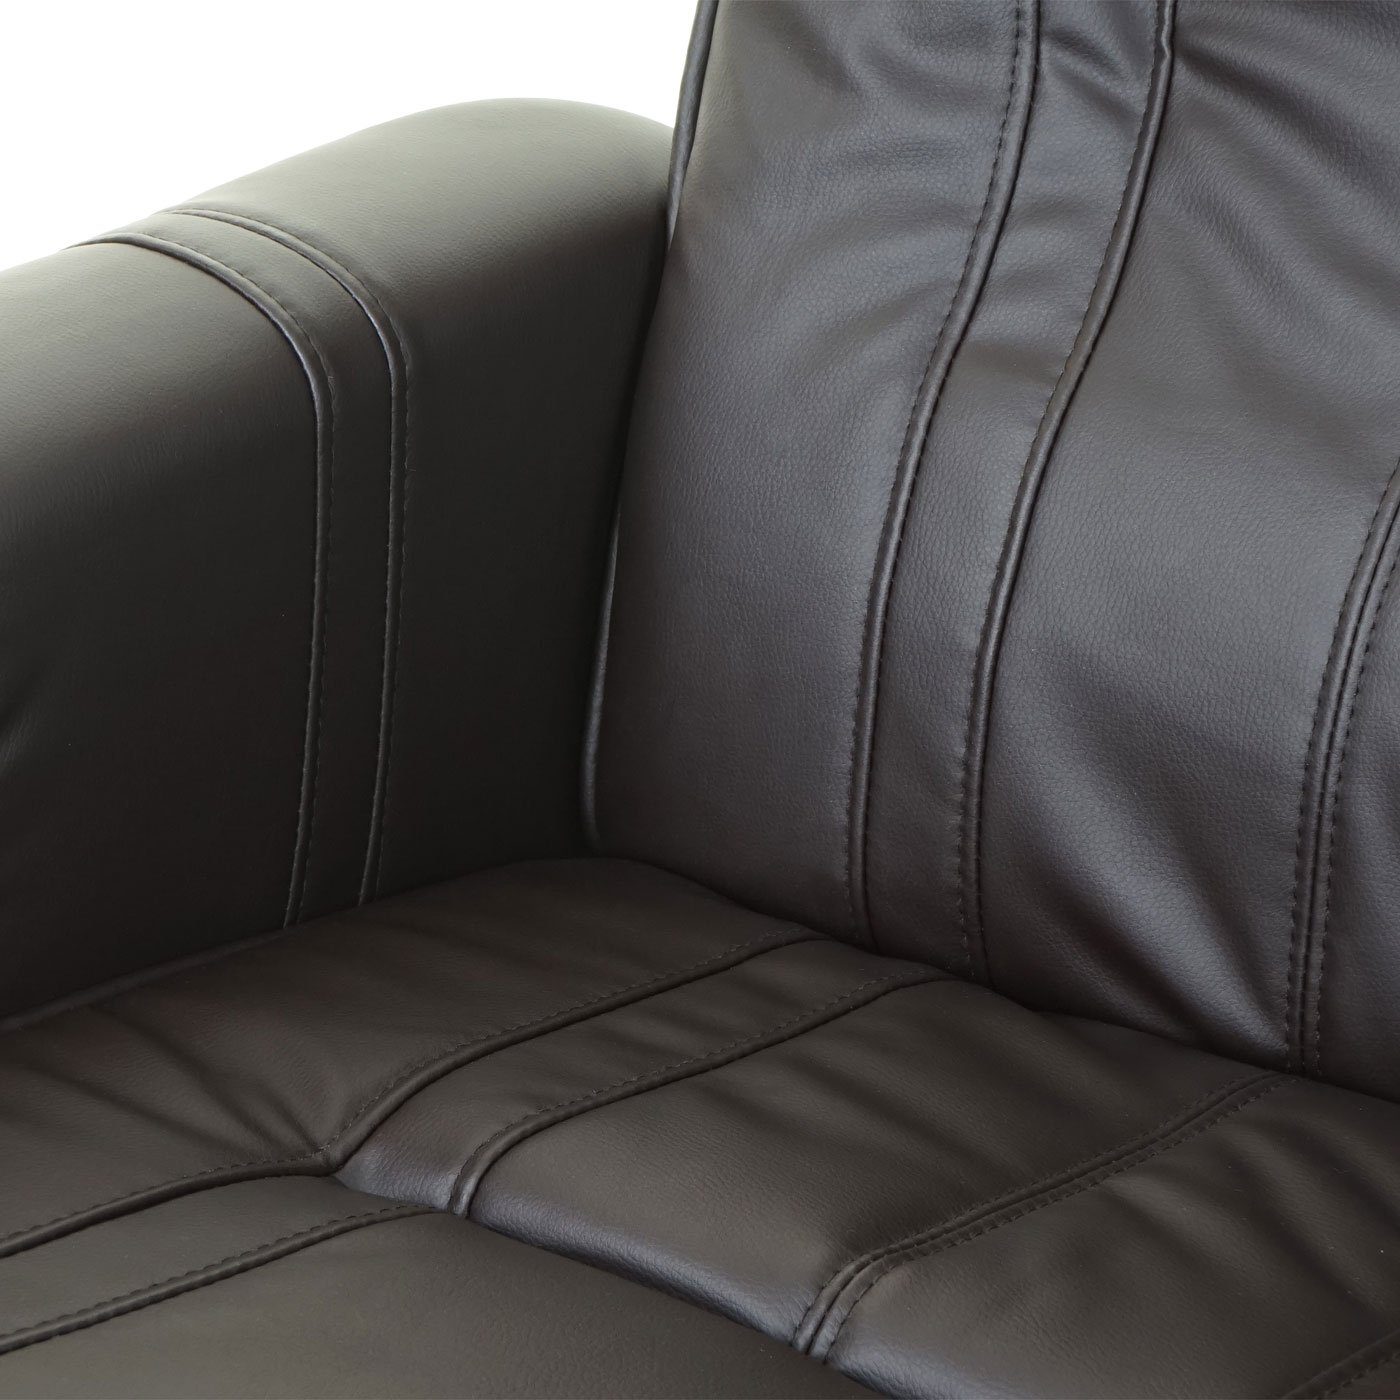 MCW-C46, Sessel Um braun feststellbar Relaxsessel Schraubmechanismus drehbar, 360° neigbar, MCW durch